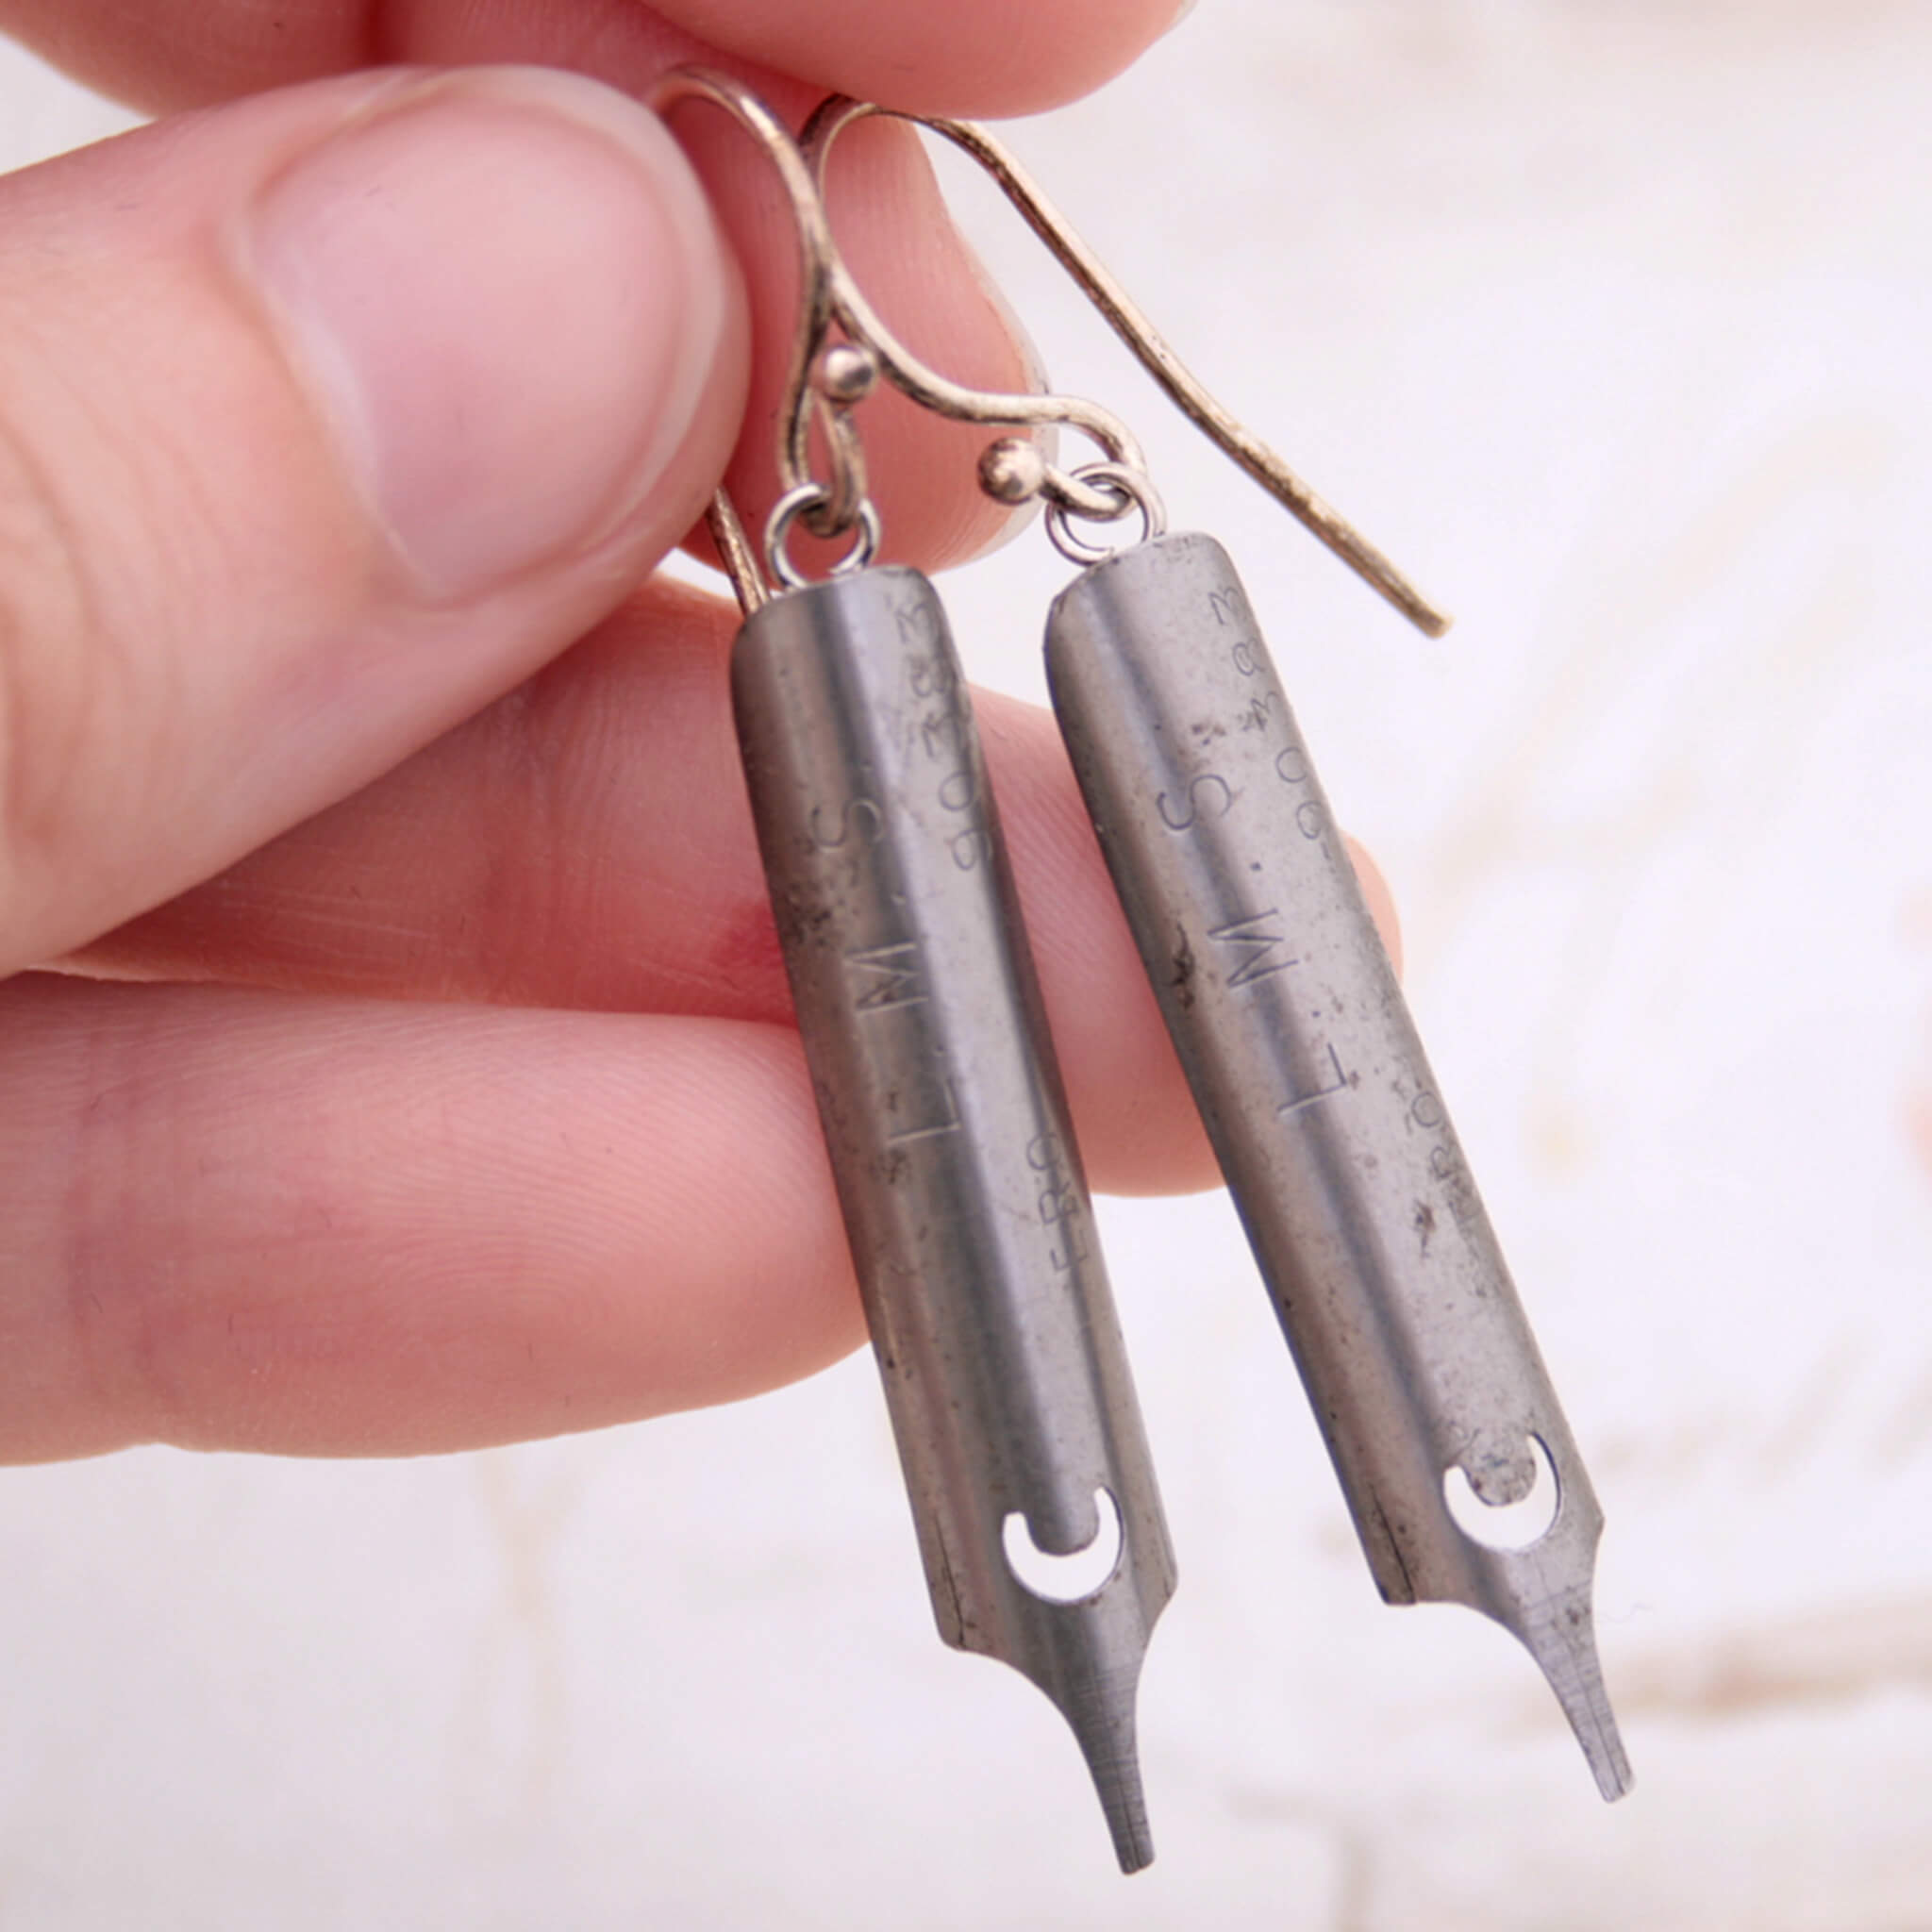 steel pen nib earrings being hold in hand